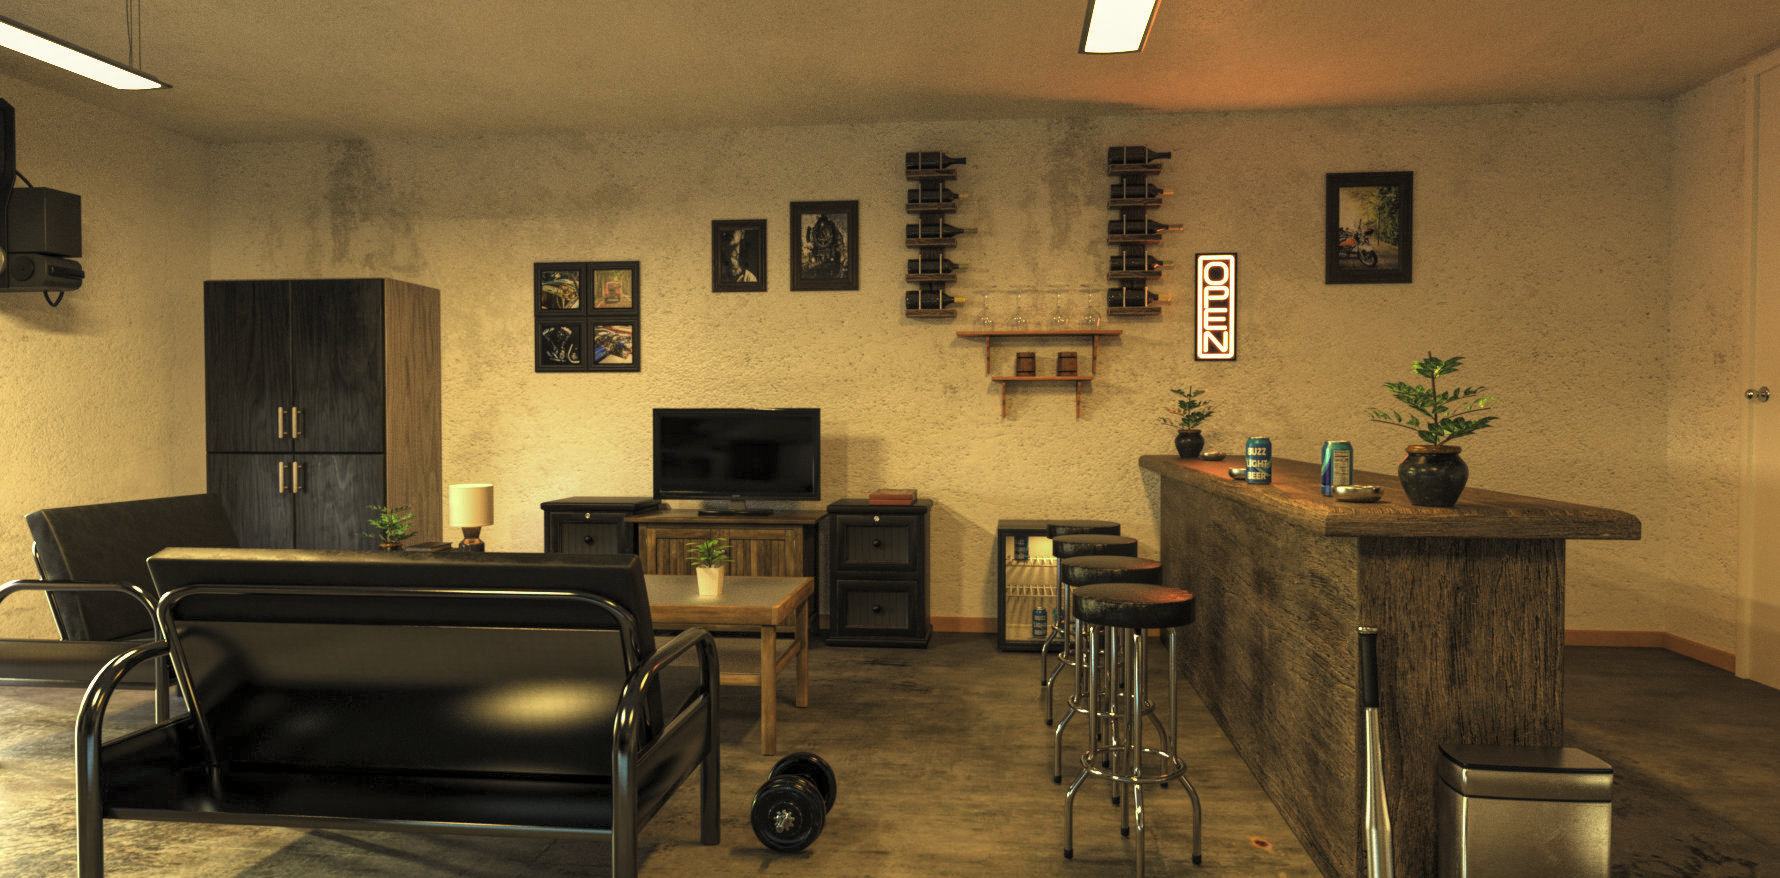 PS Caveman Garage by: PAN Studios, 3D Models by Daz 3D